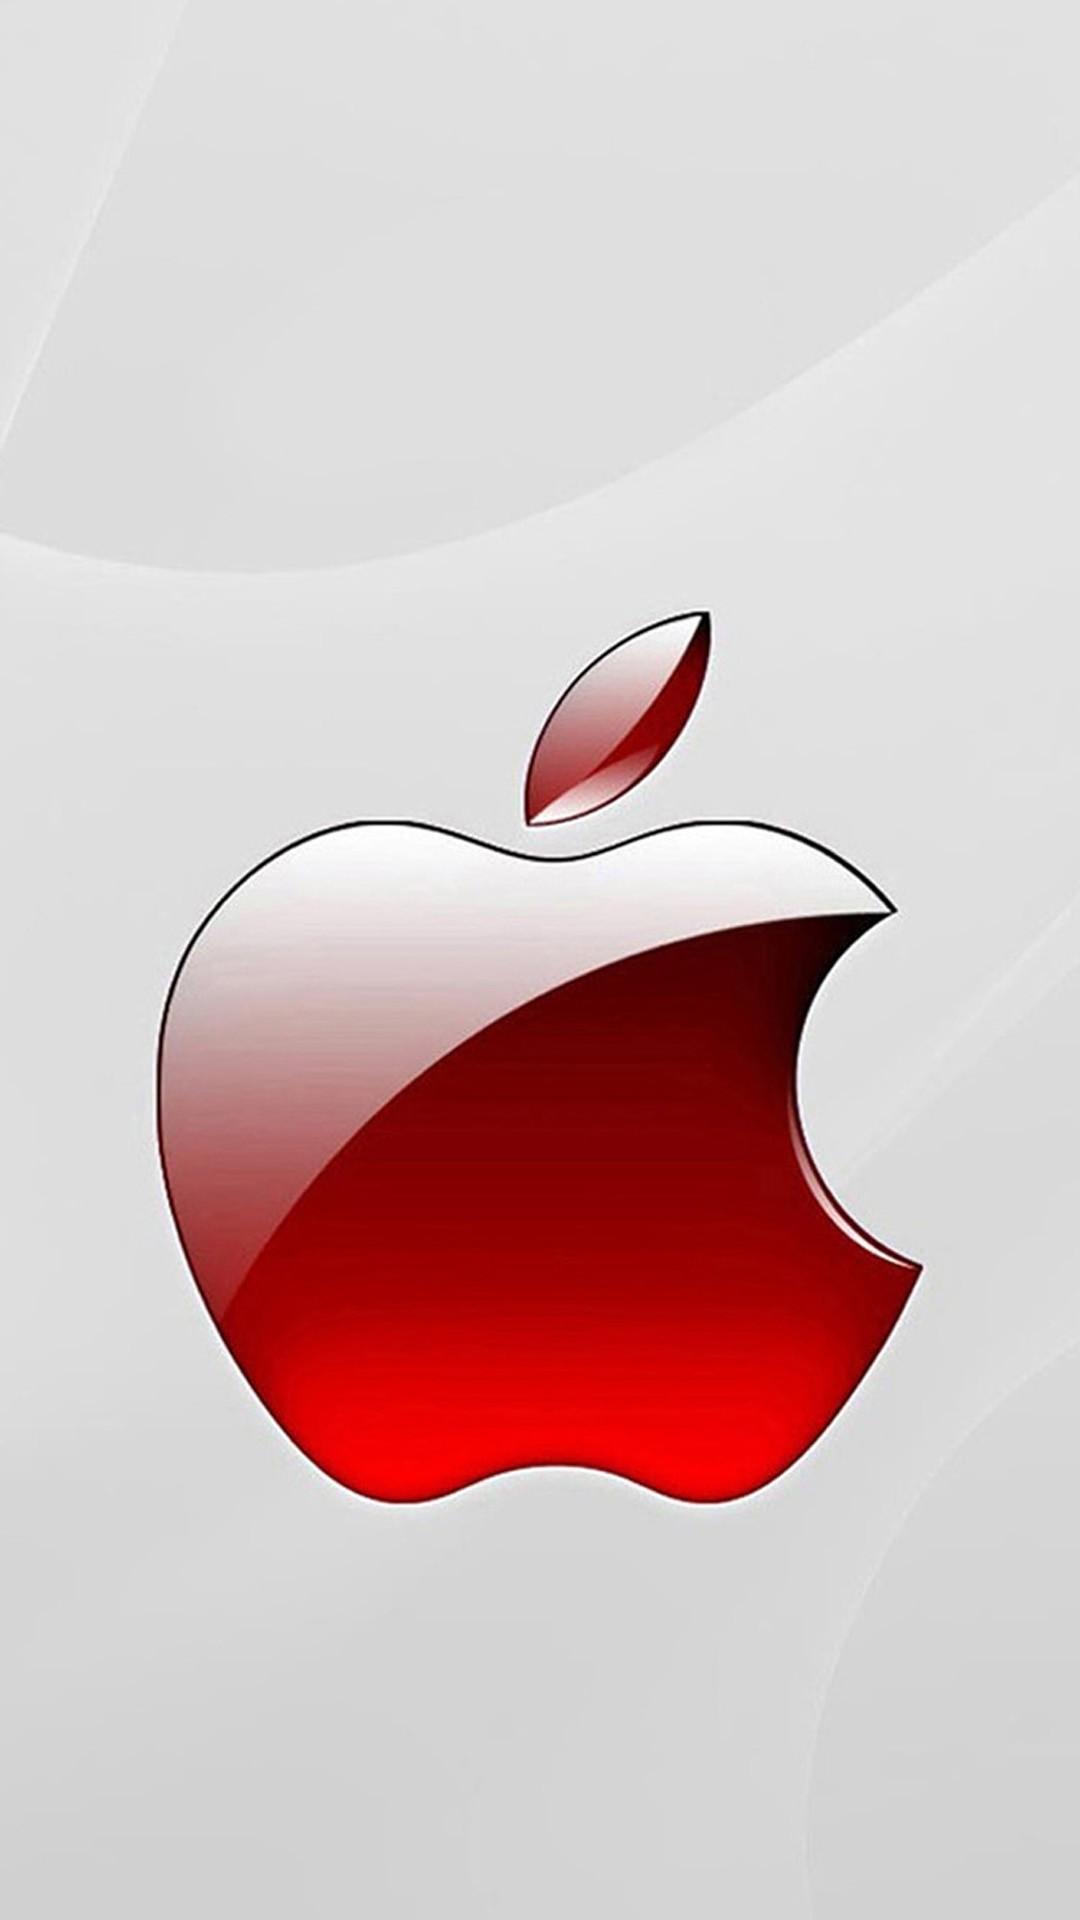 Red Apple Logo Wallpaper iPhone 4 Data Src Download Red Apple Symbol